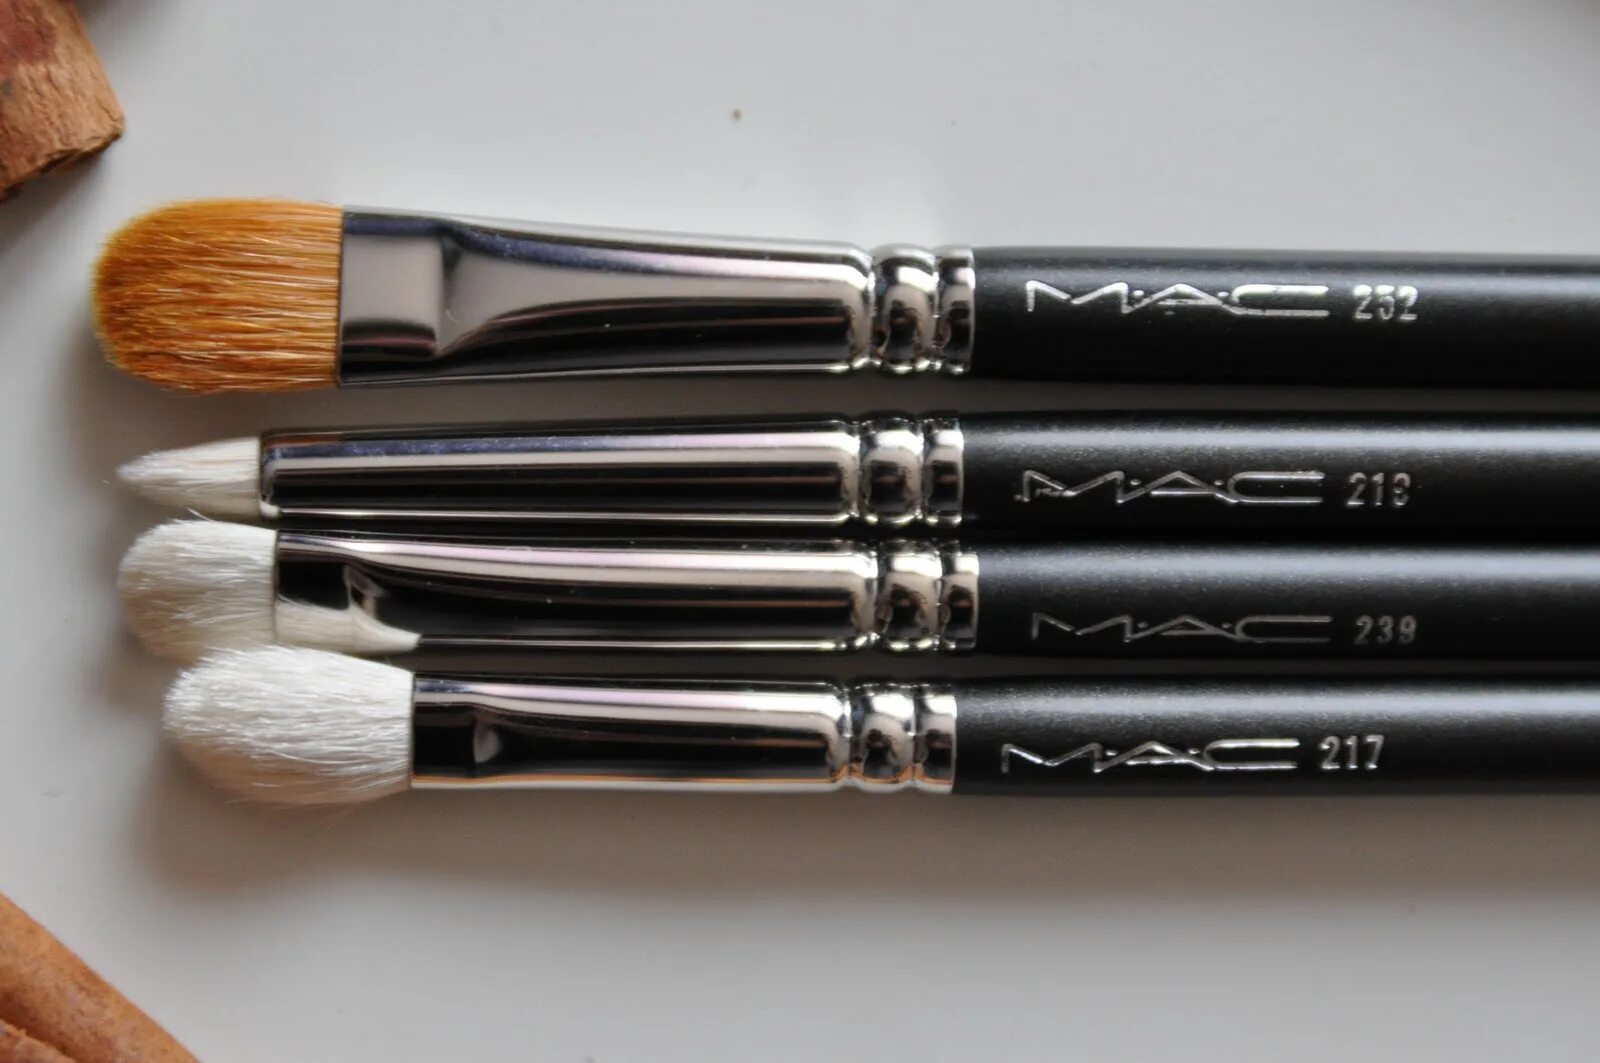 Pencils brushes. Кисть Mac 219. Mac 318 кисть. Topface кисть для макияжа №13 "Pencil Brush" кисть карандаш. Кисти Mac по номерам.